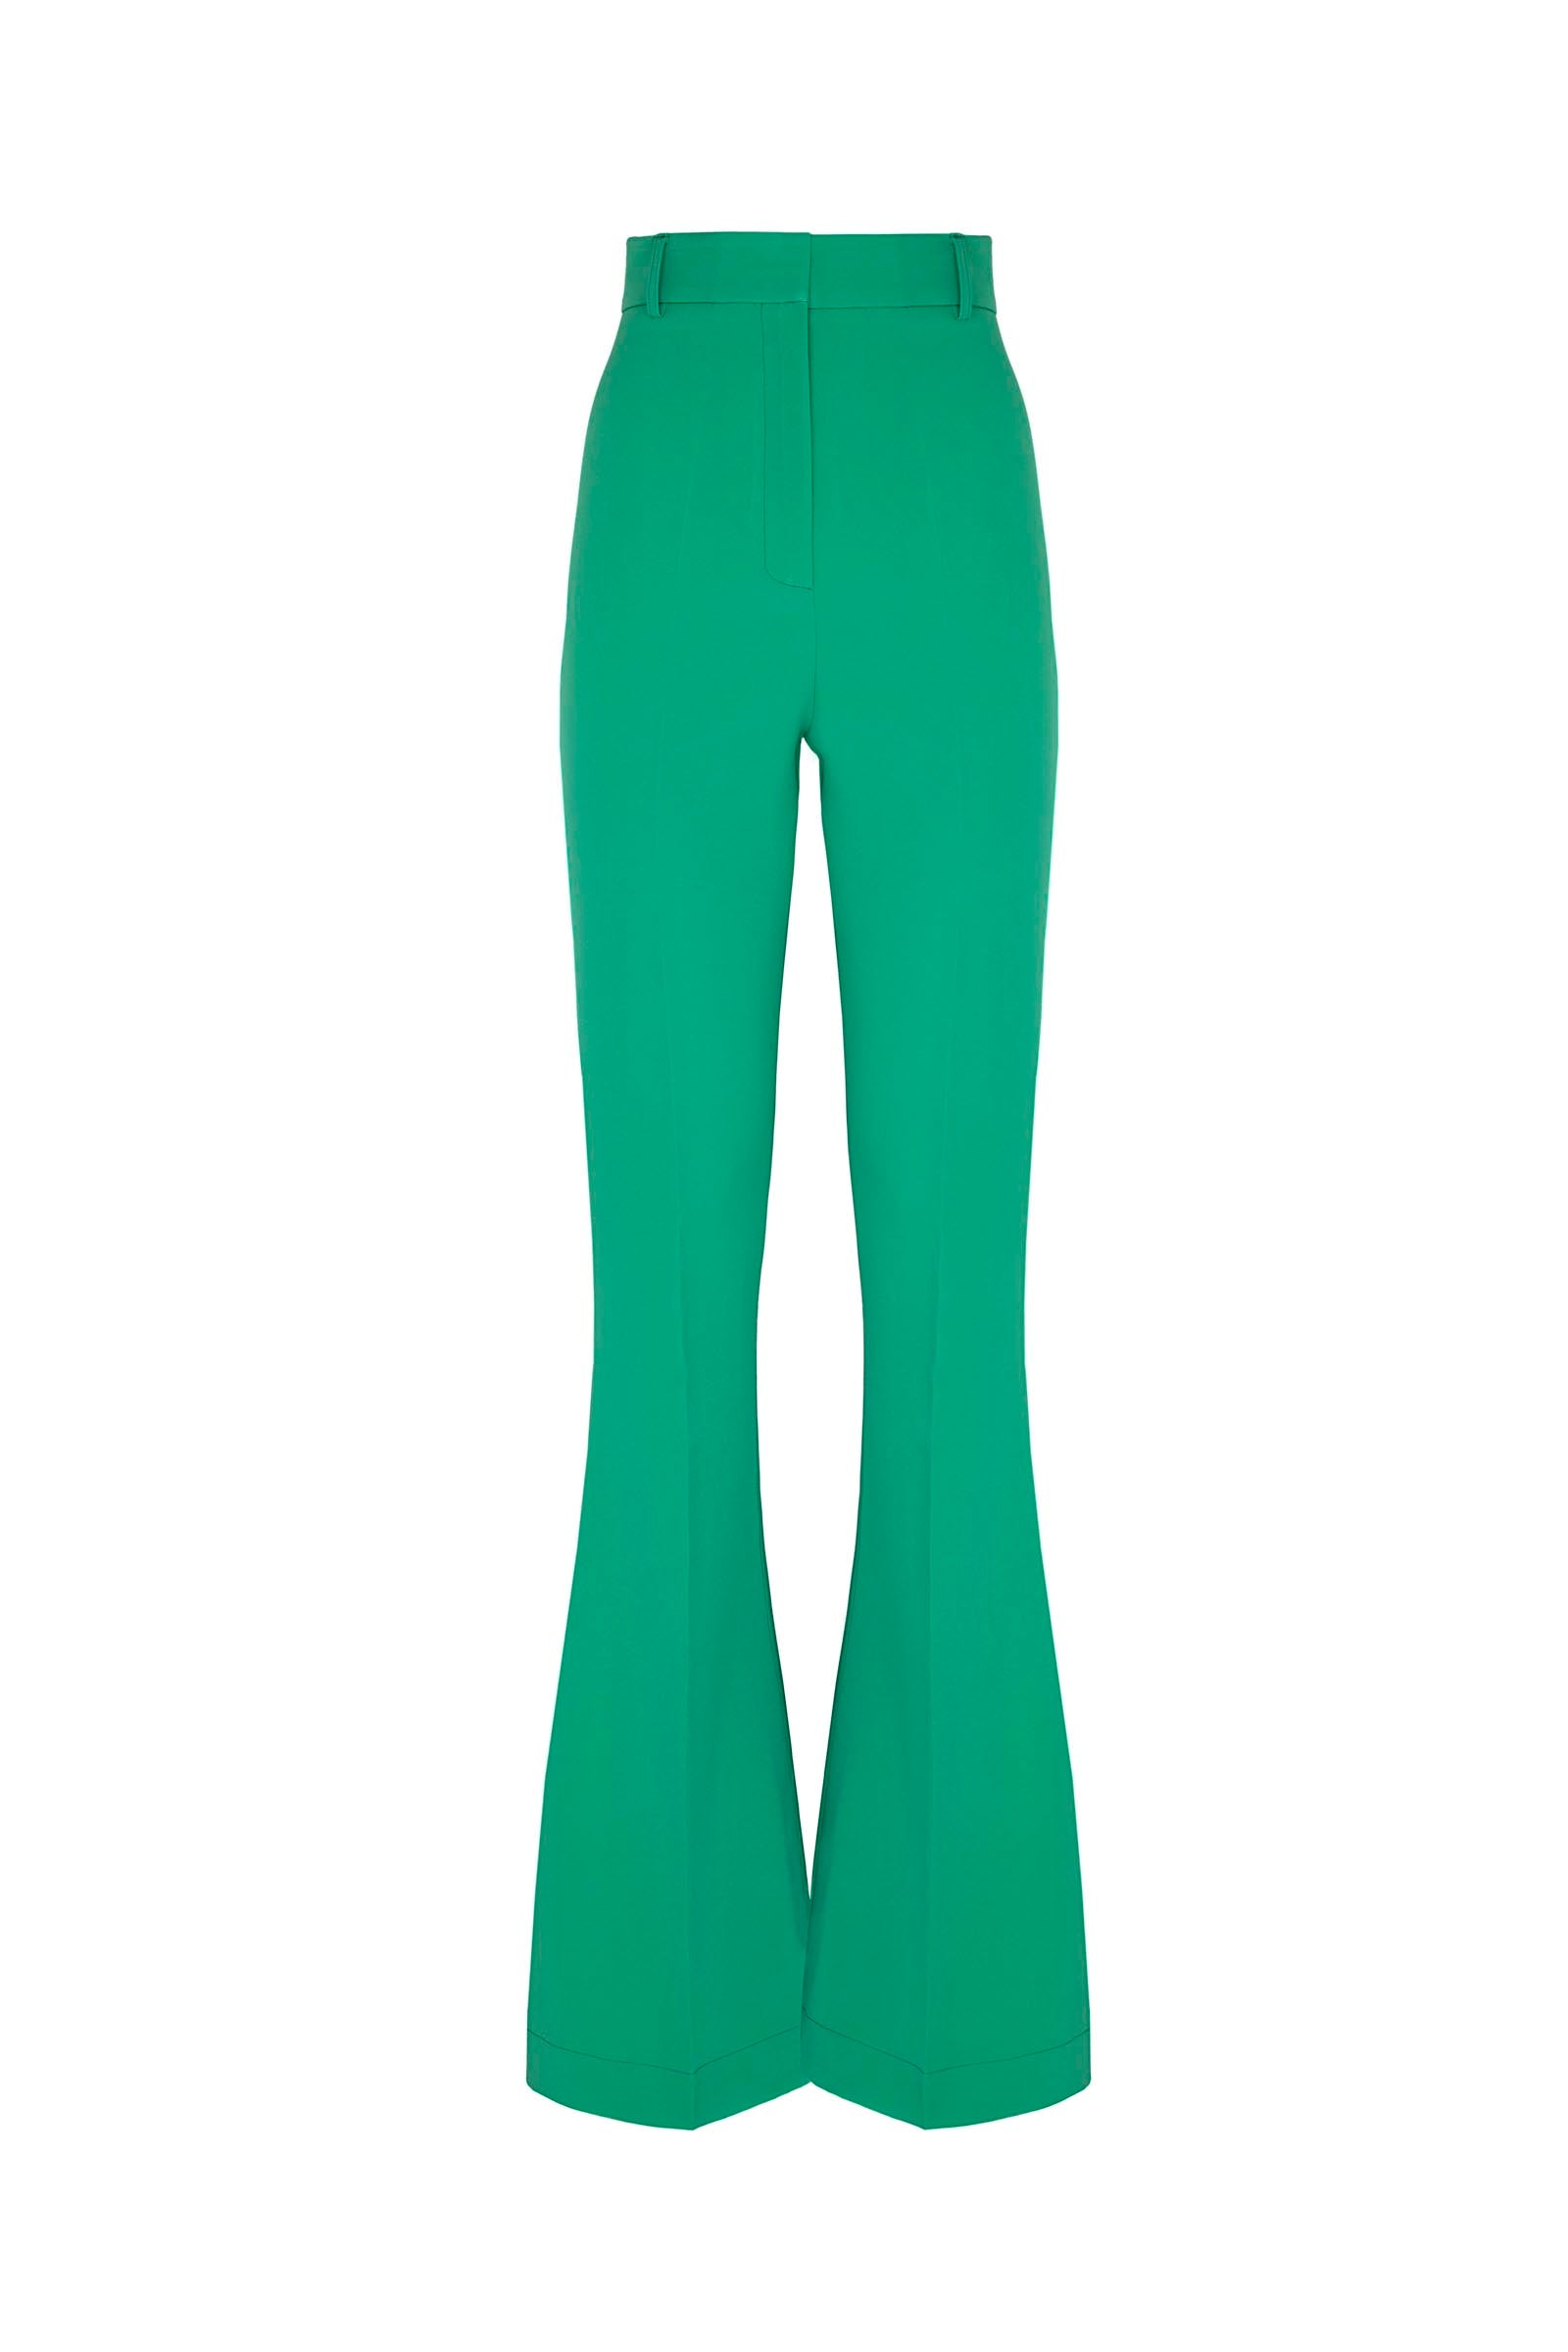 The Green Neo-Crepe Bianca Pants